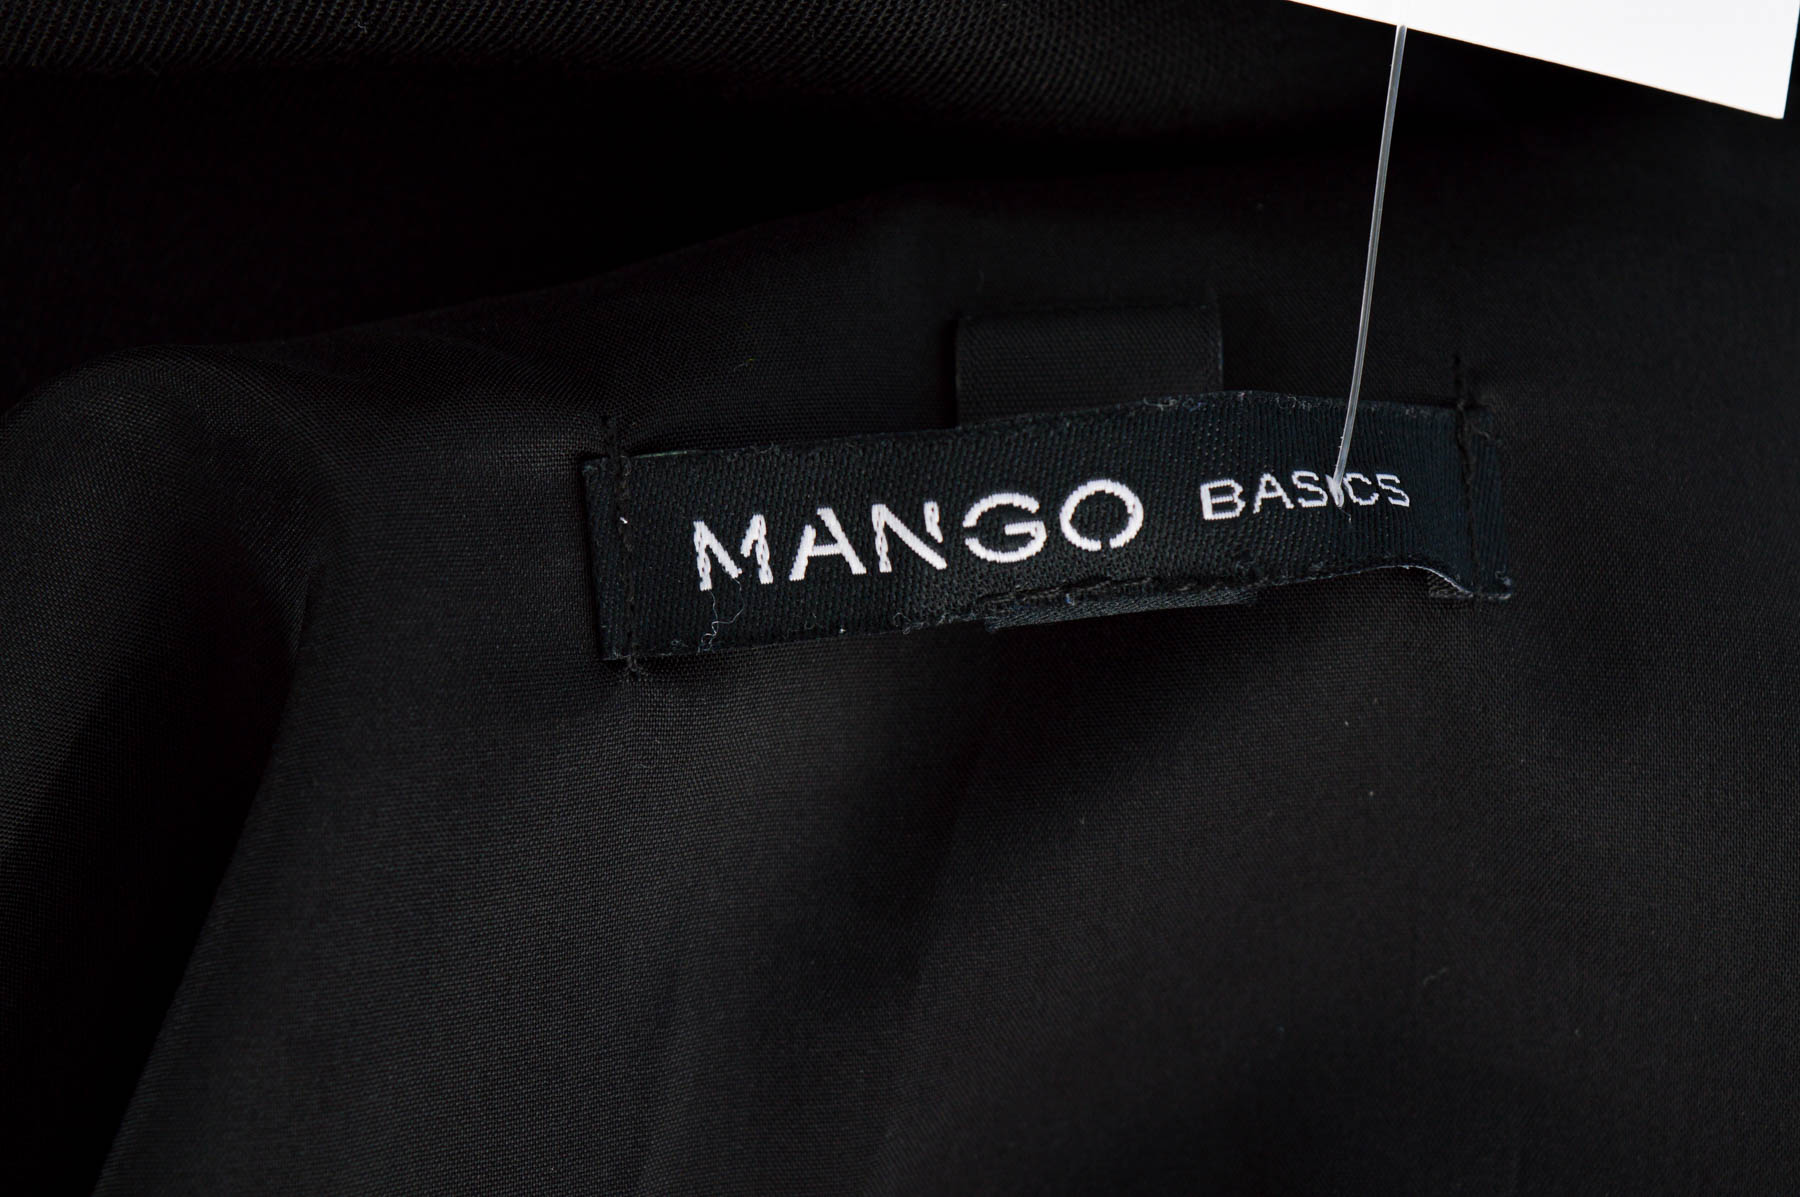 Dress - MANGO BASICS - 2